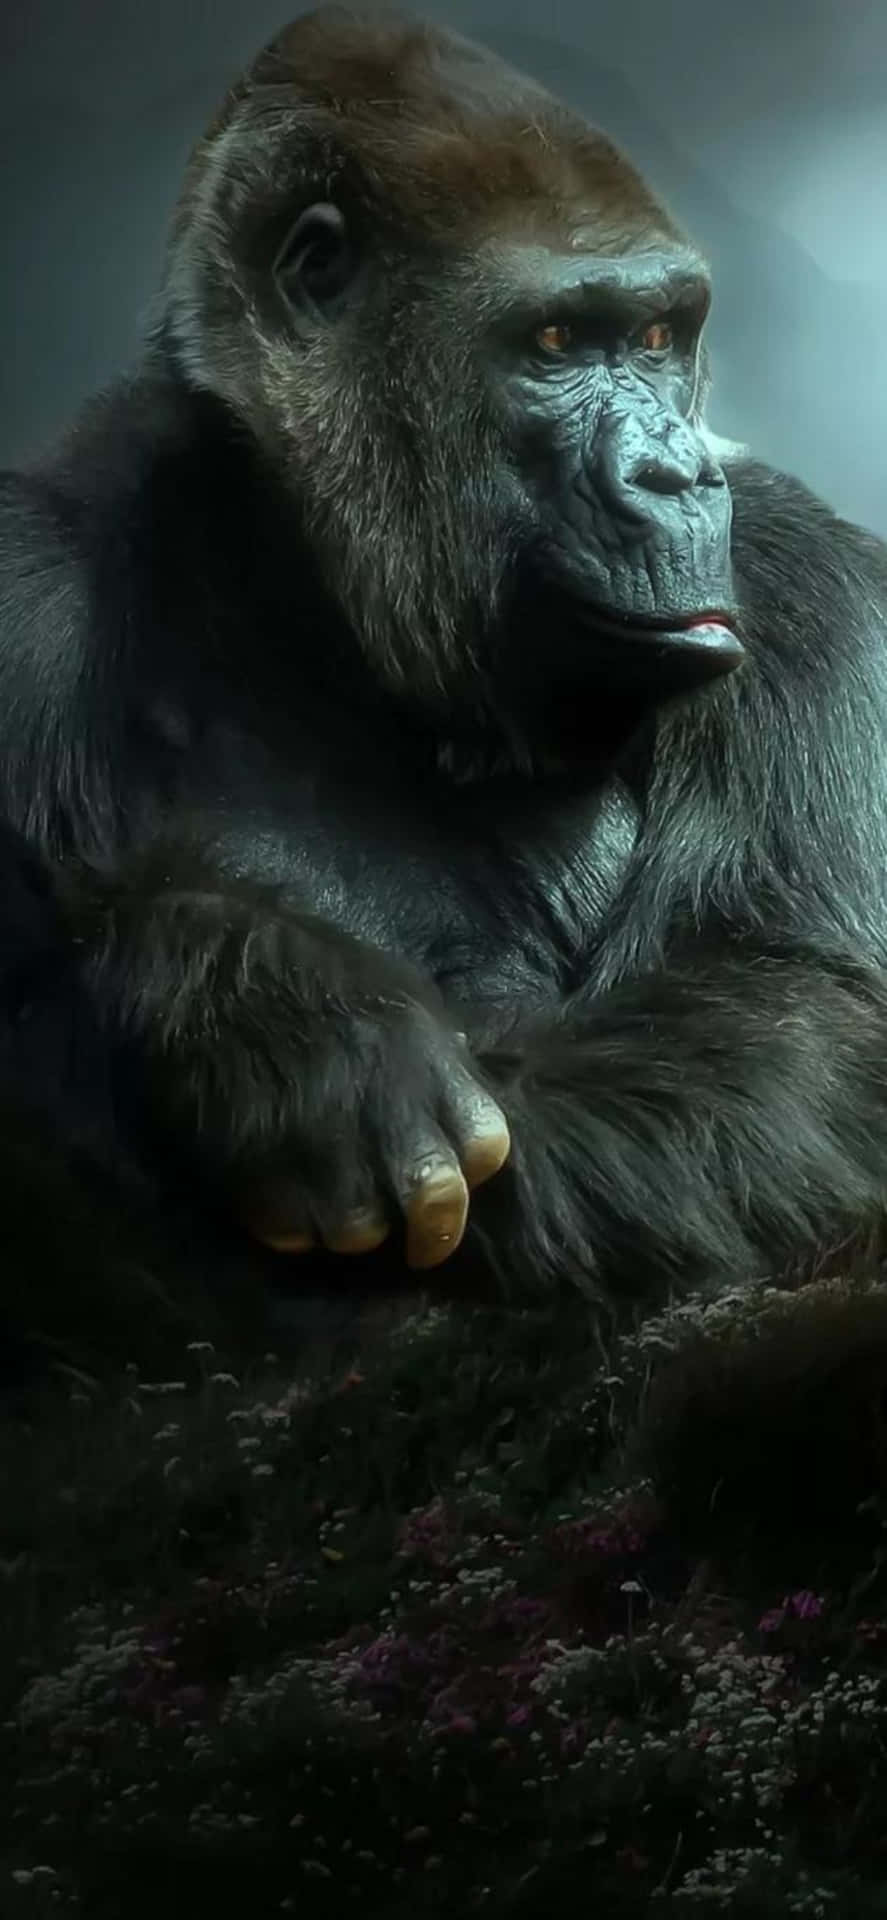 An eye-catching iPhone X featuring a Gorilla